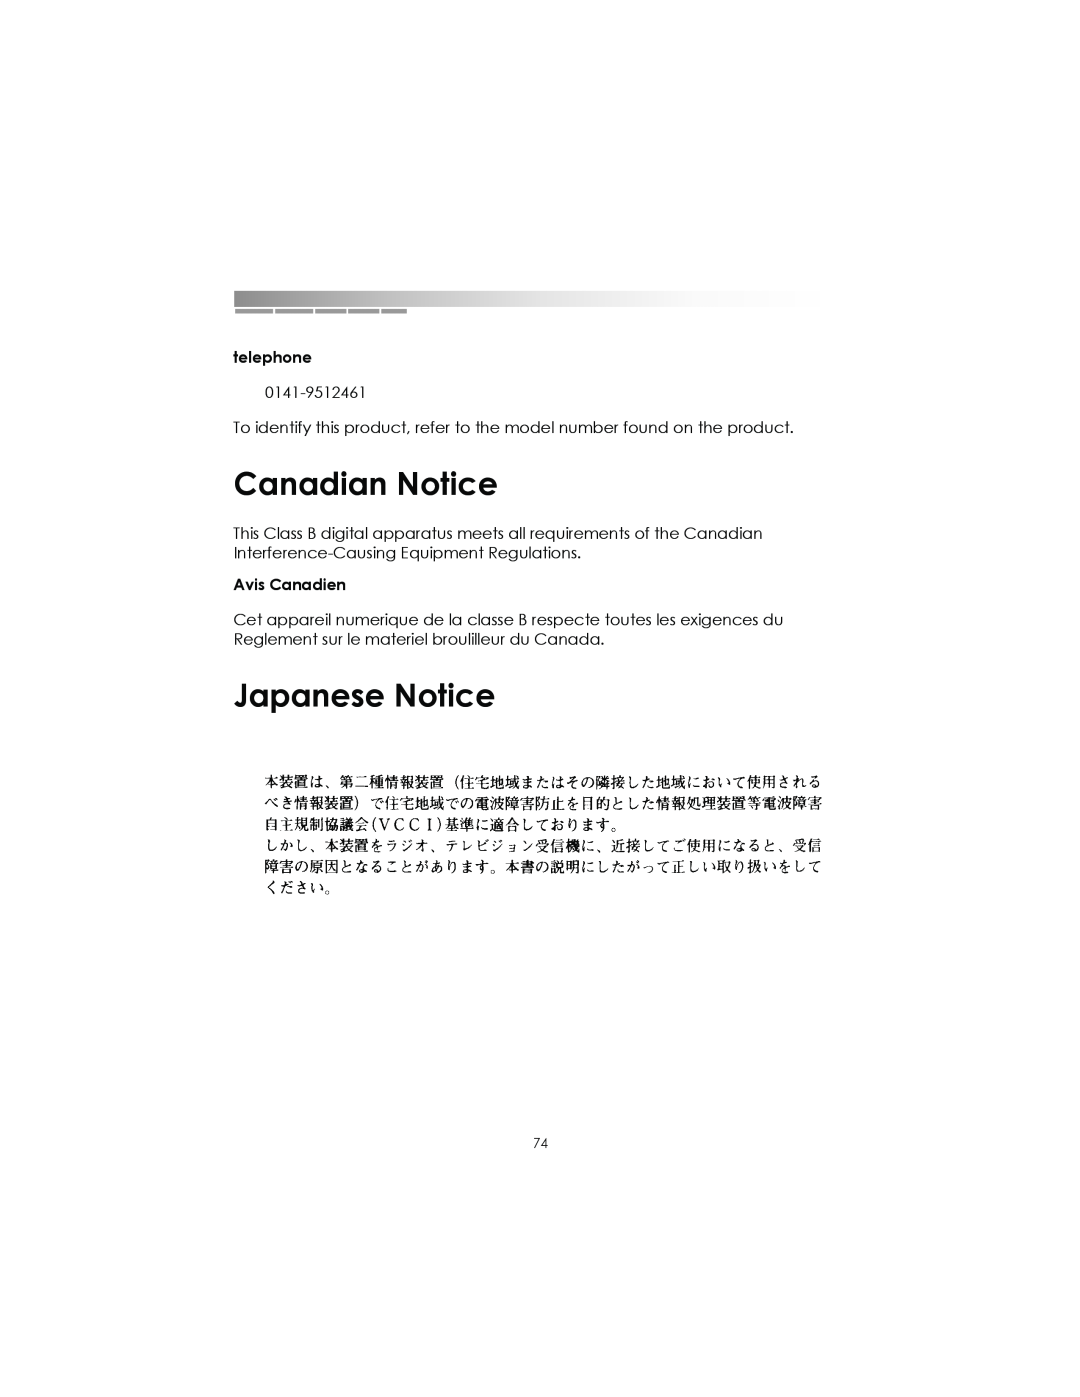 eMachines AAFW53700001K0 manual Canadian Notice, Japanese Notice, telephone, Avis Canadien 